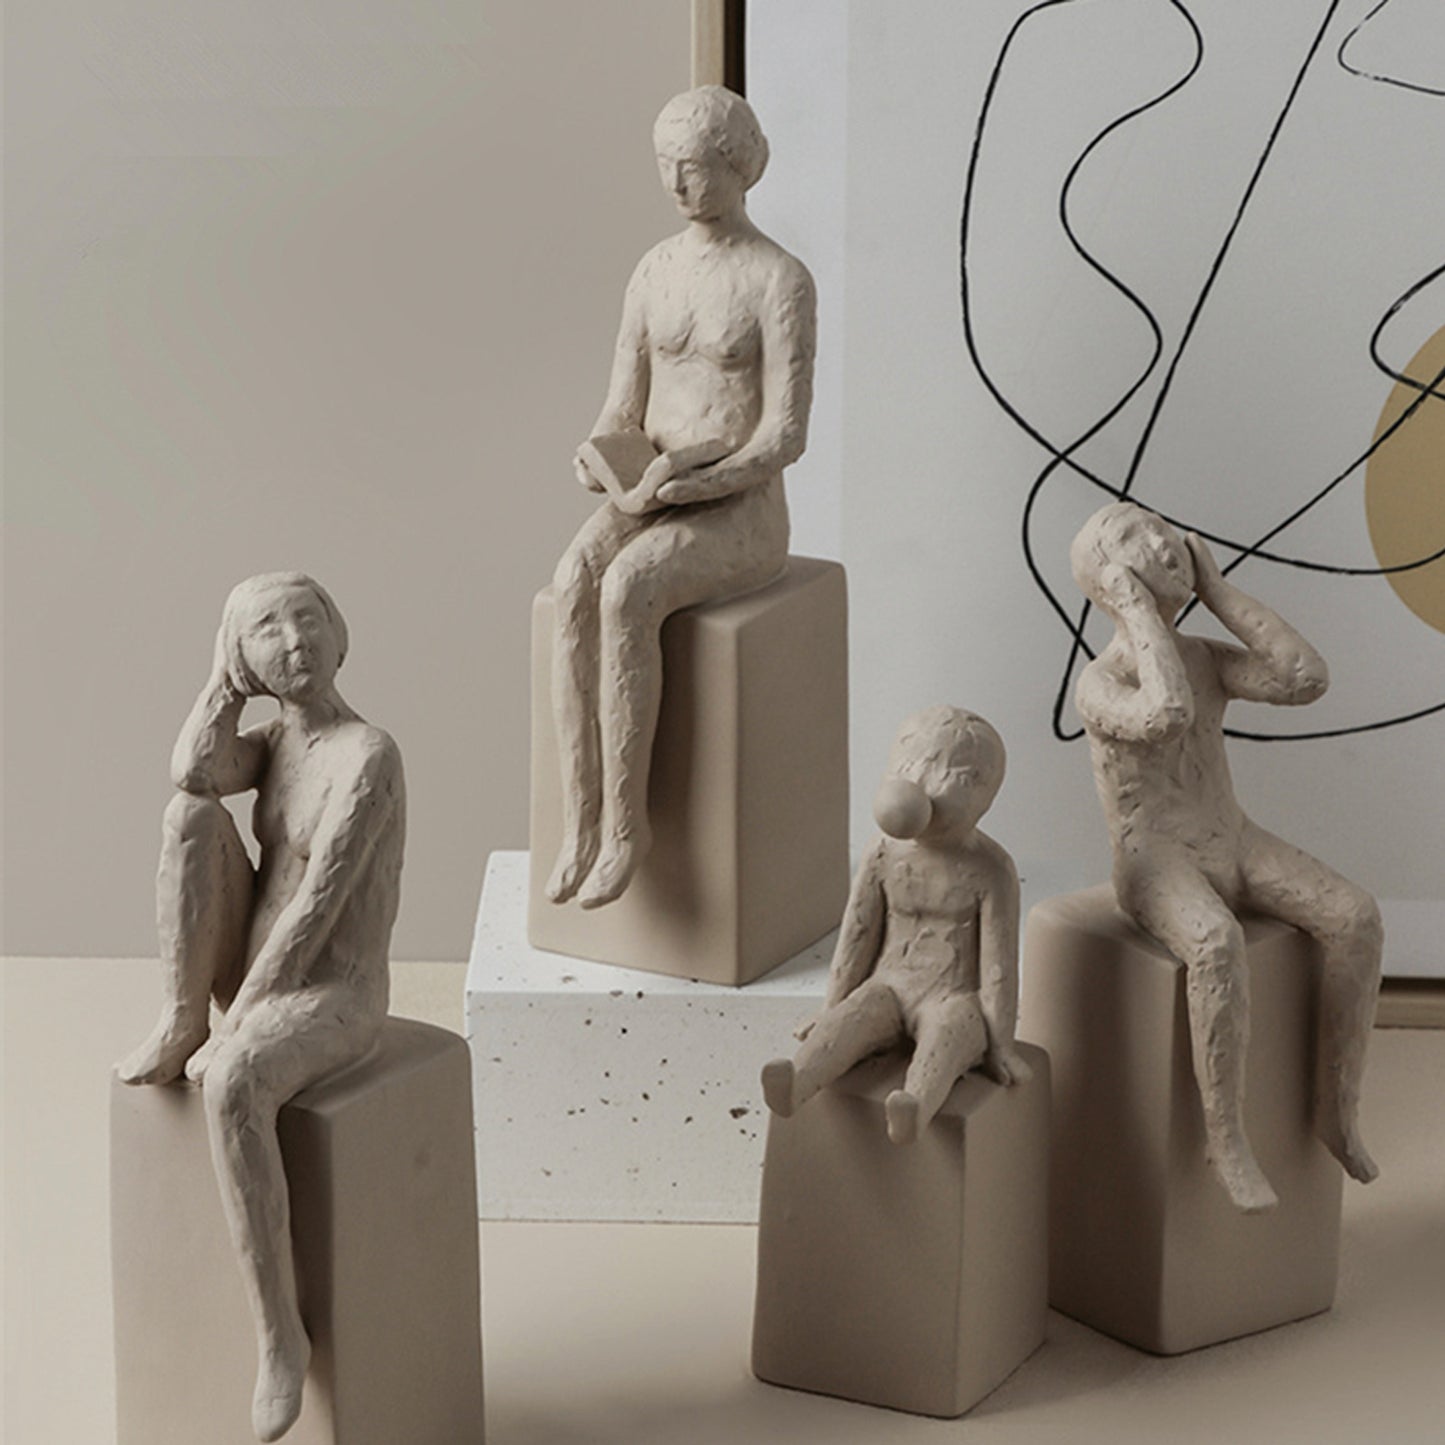 Small Ceramic Figures Ornament